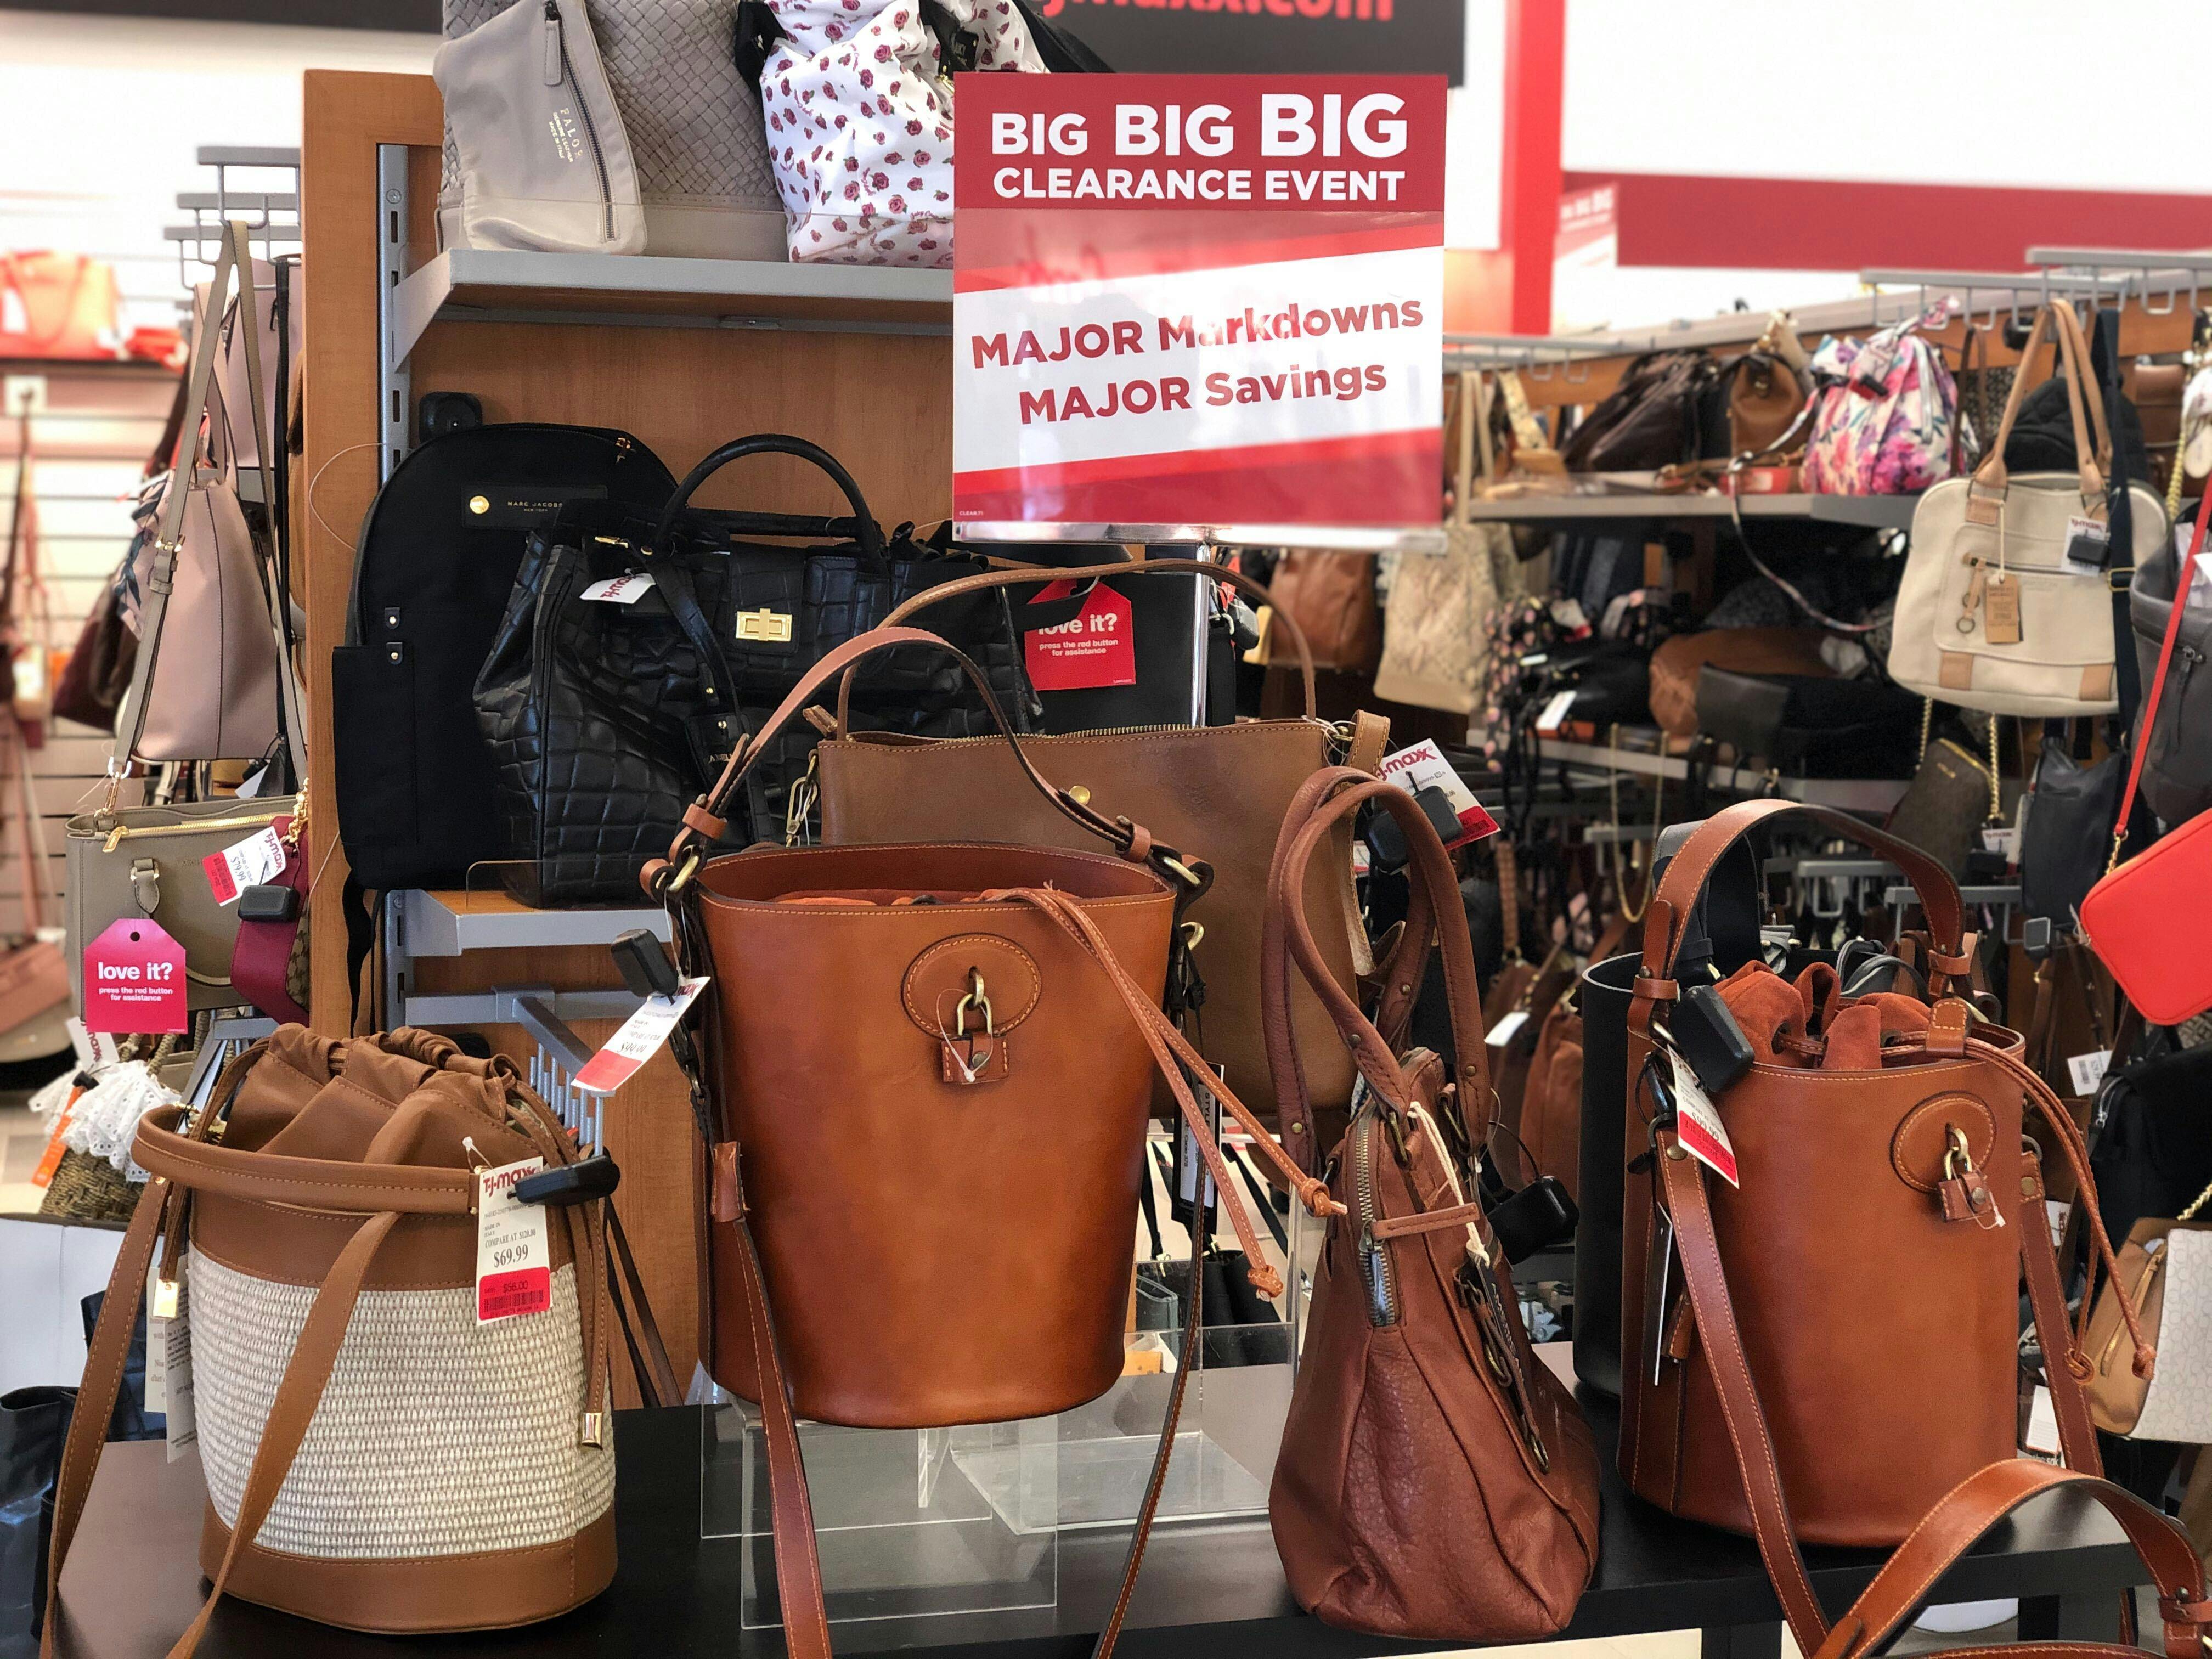 Does your local @tjmaxx sell designer luxury handbags? #tjmaxx